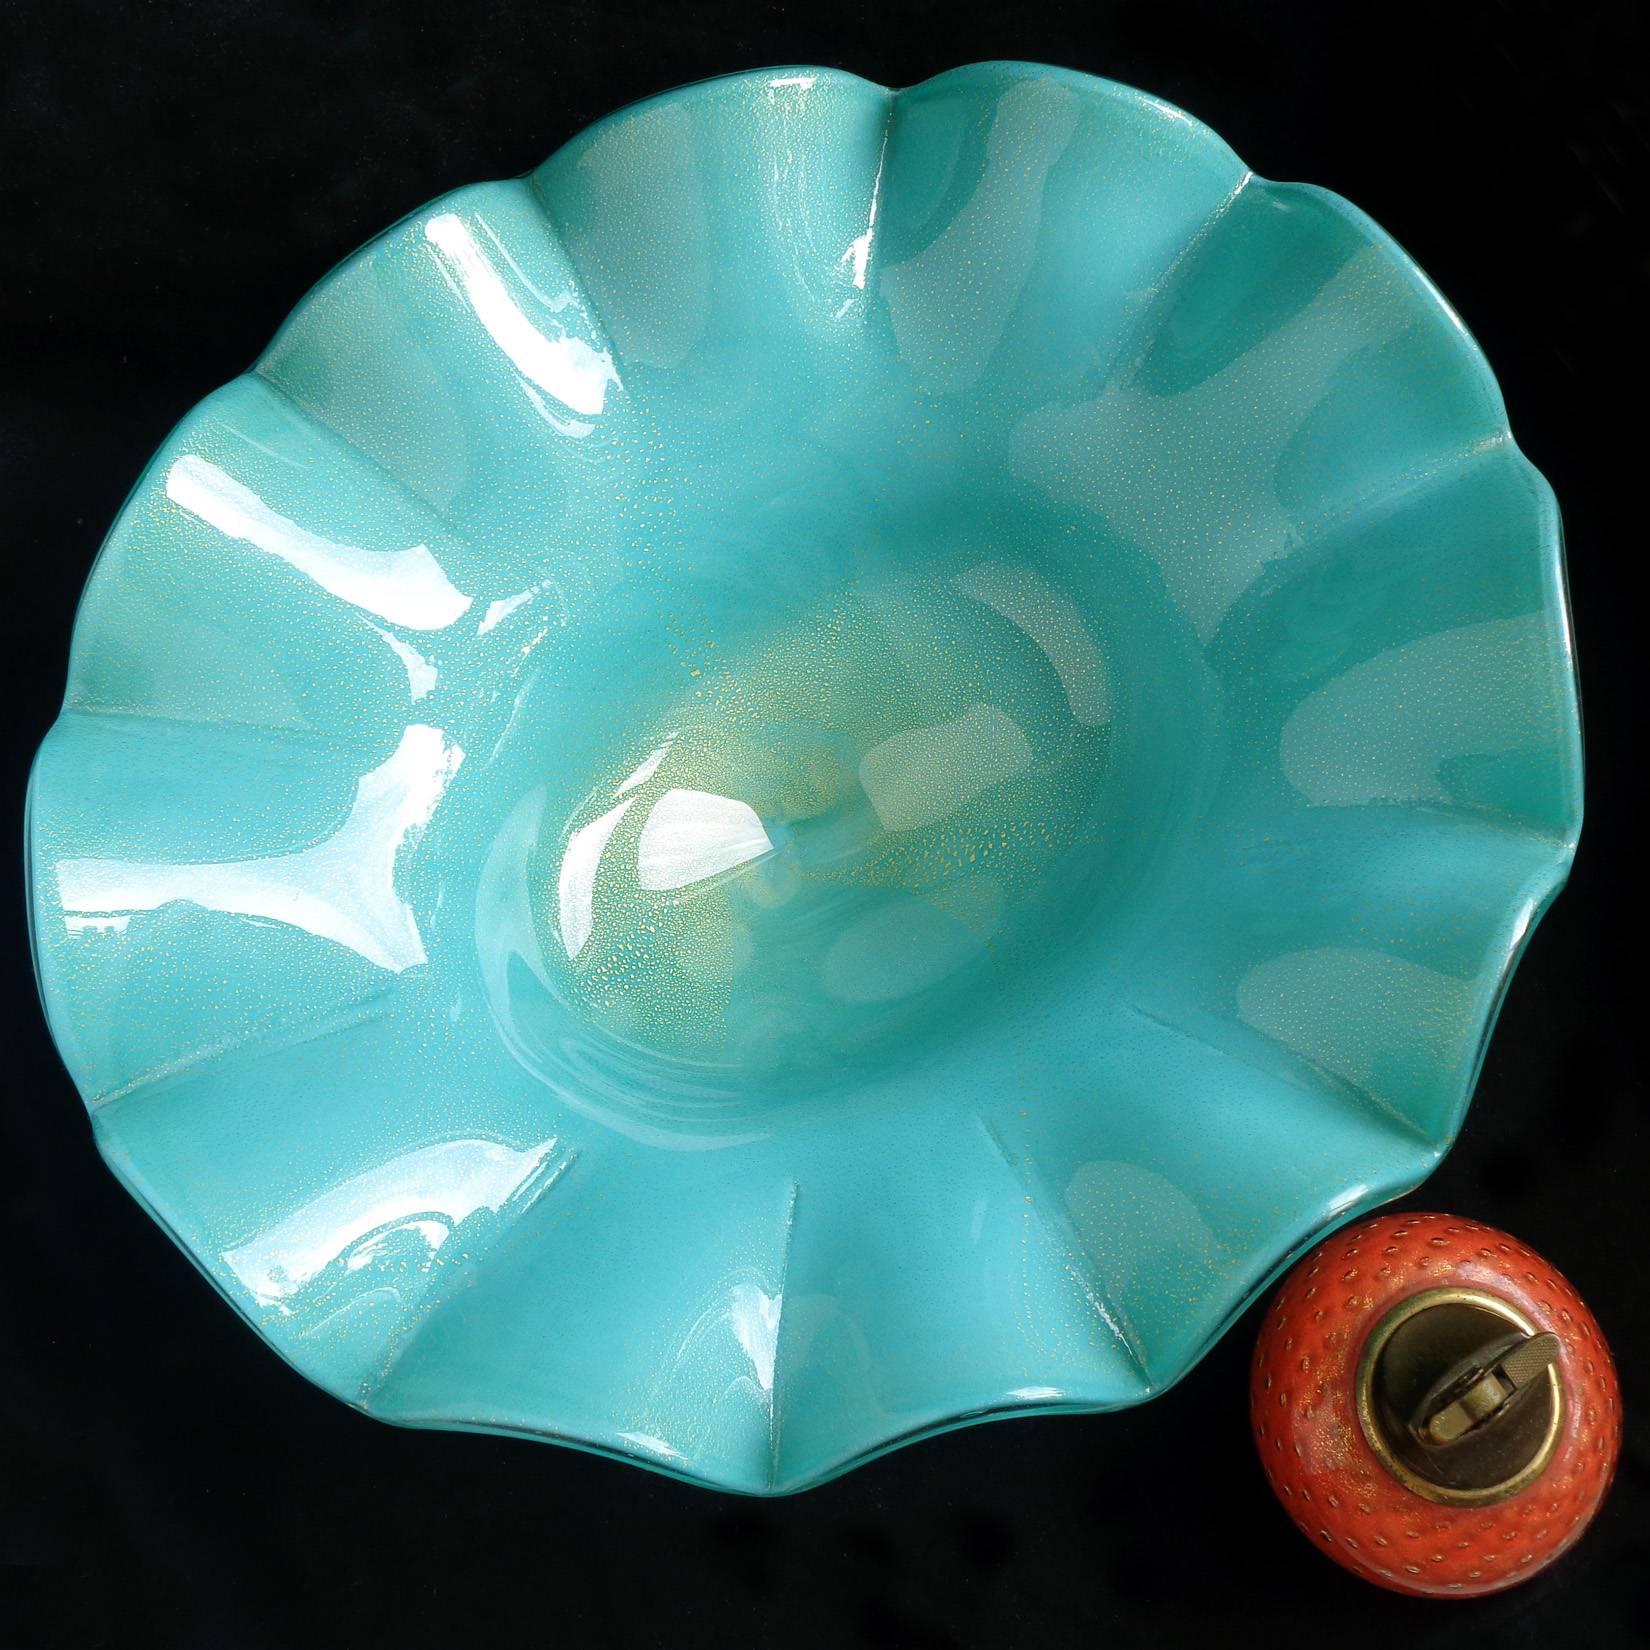 shallow glass bowl centerpiece